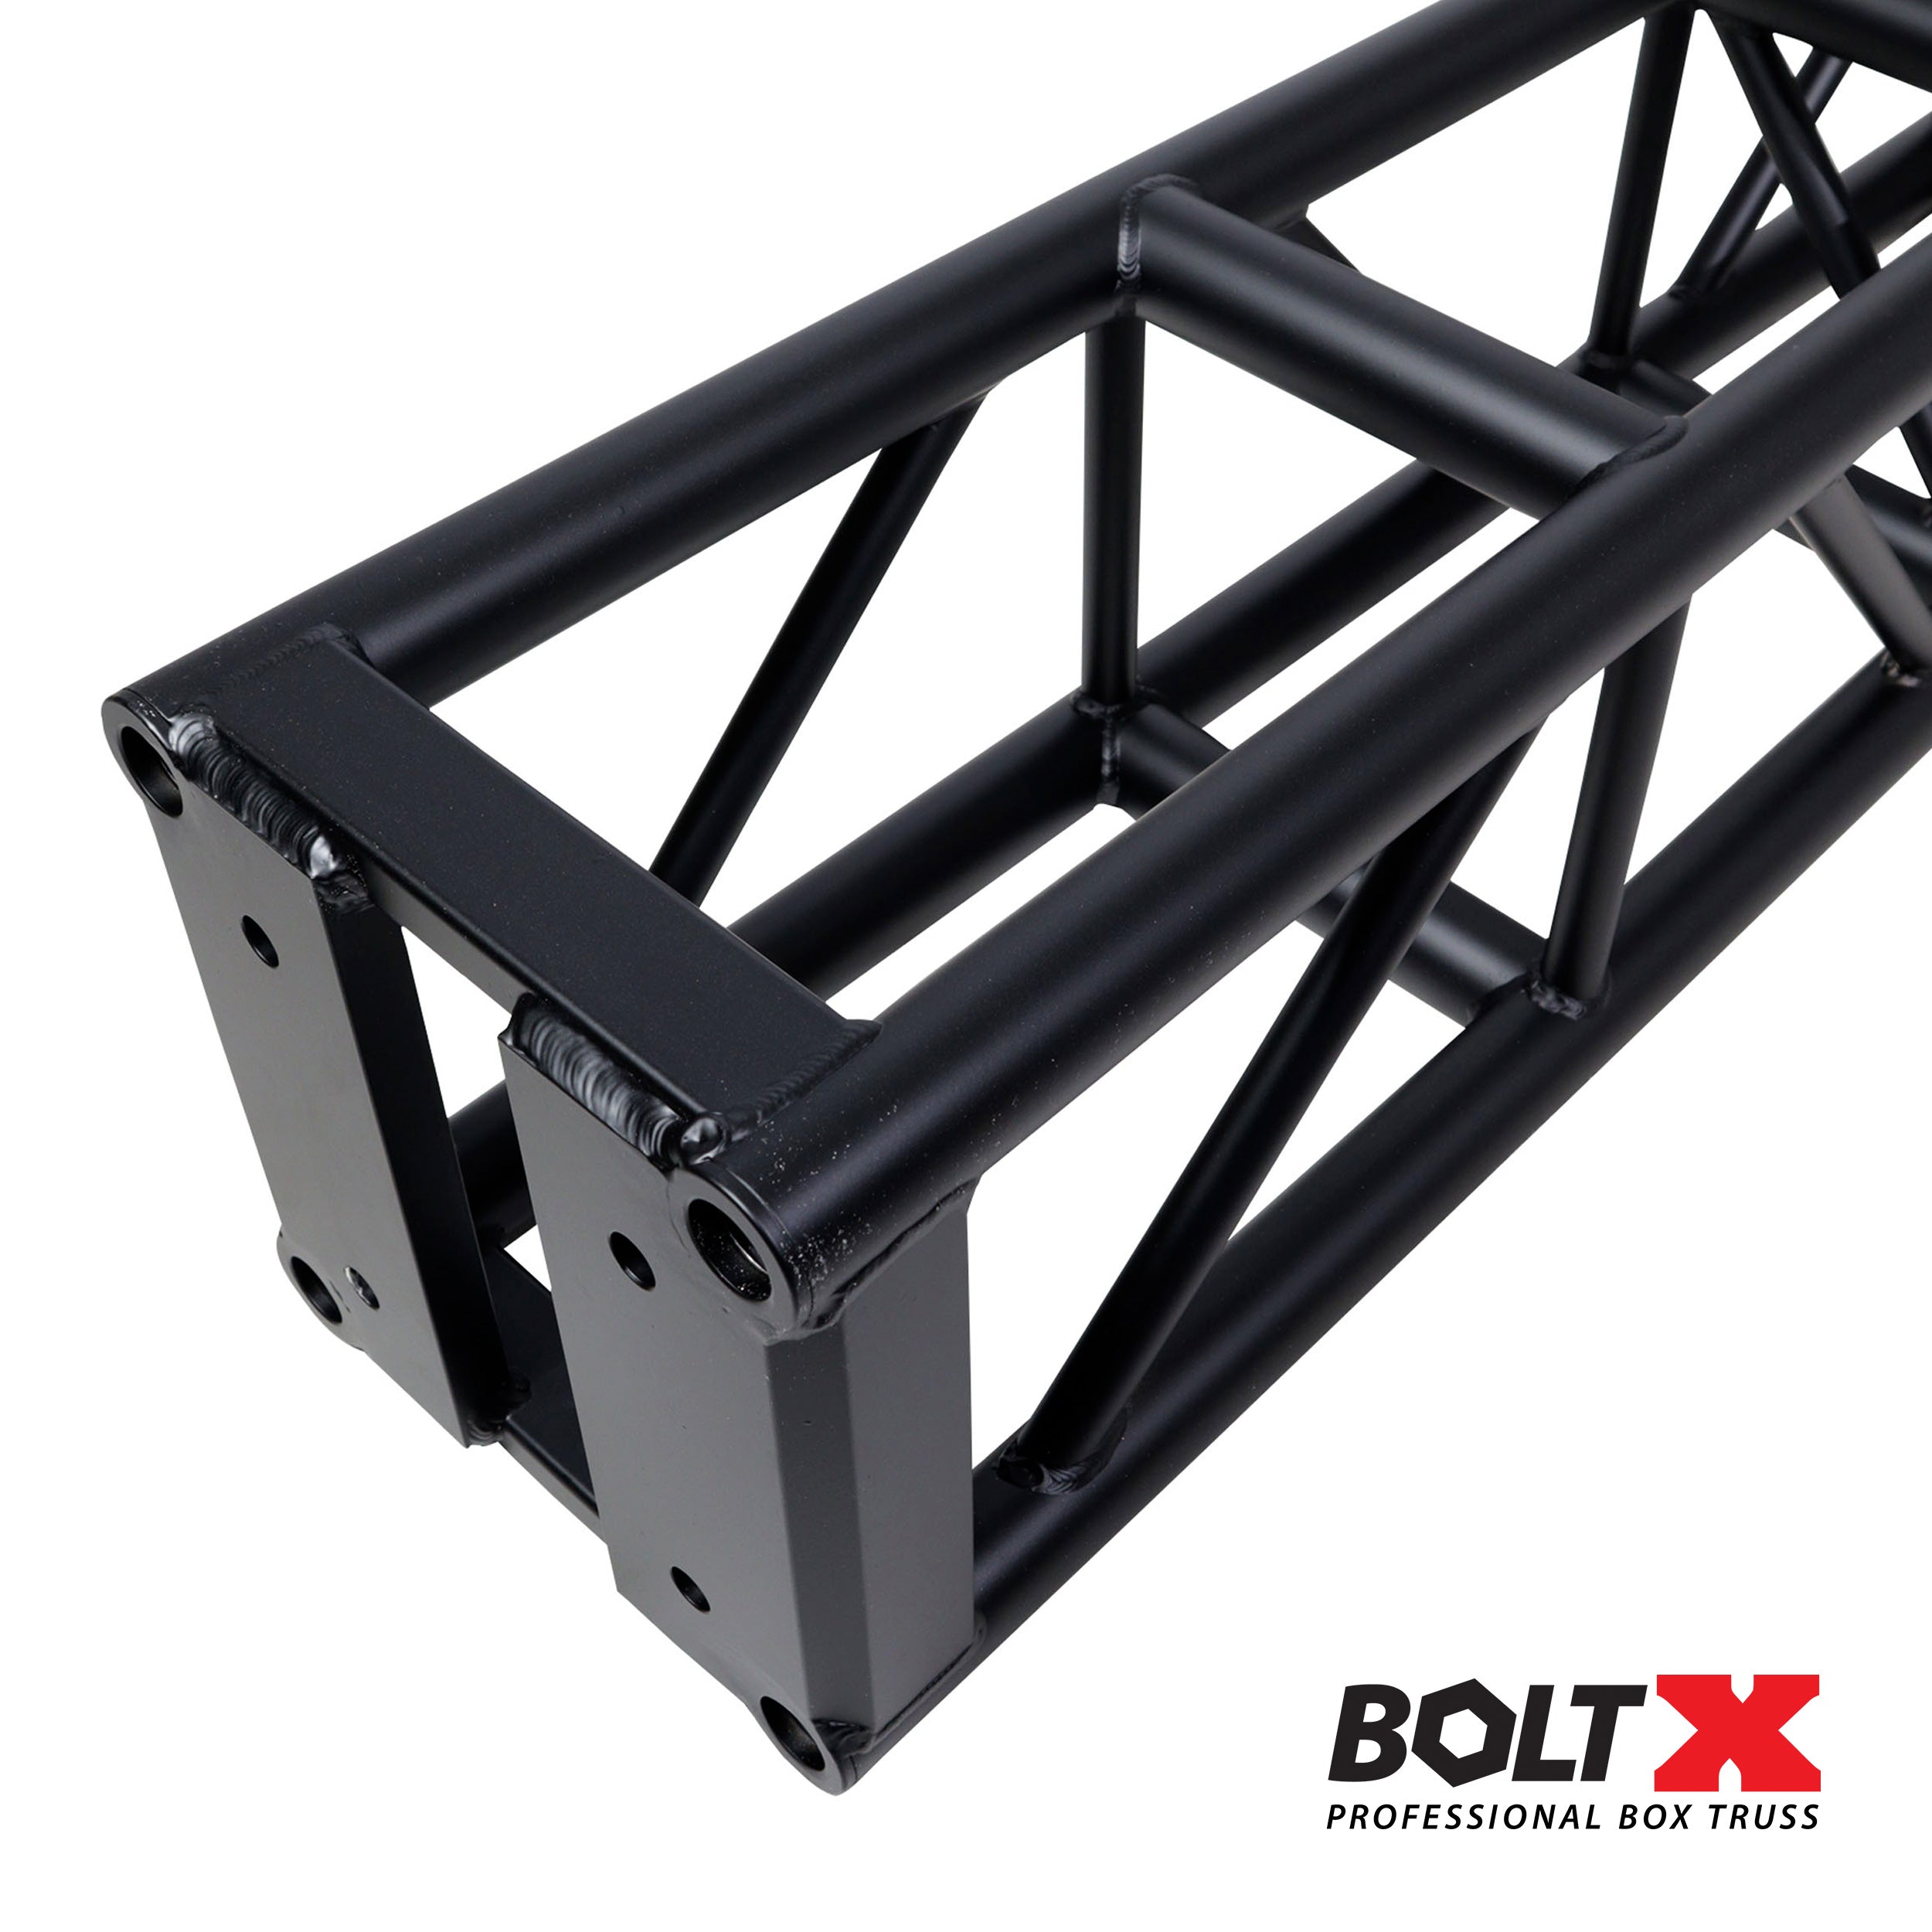 Pro X BoltX Black Bolted 12 Inch Professional Box Truss Segment | 3mm Wall – Black Finish